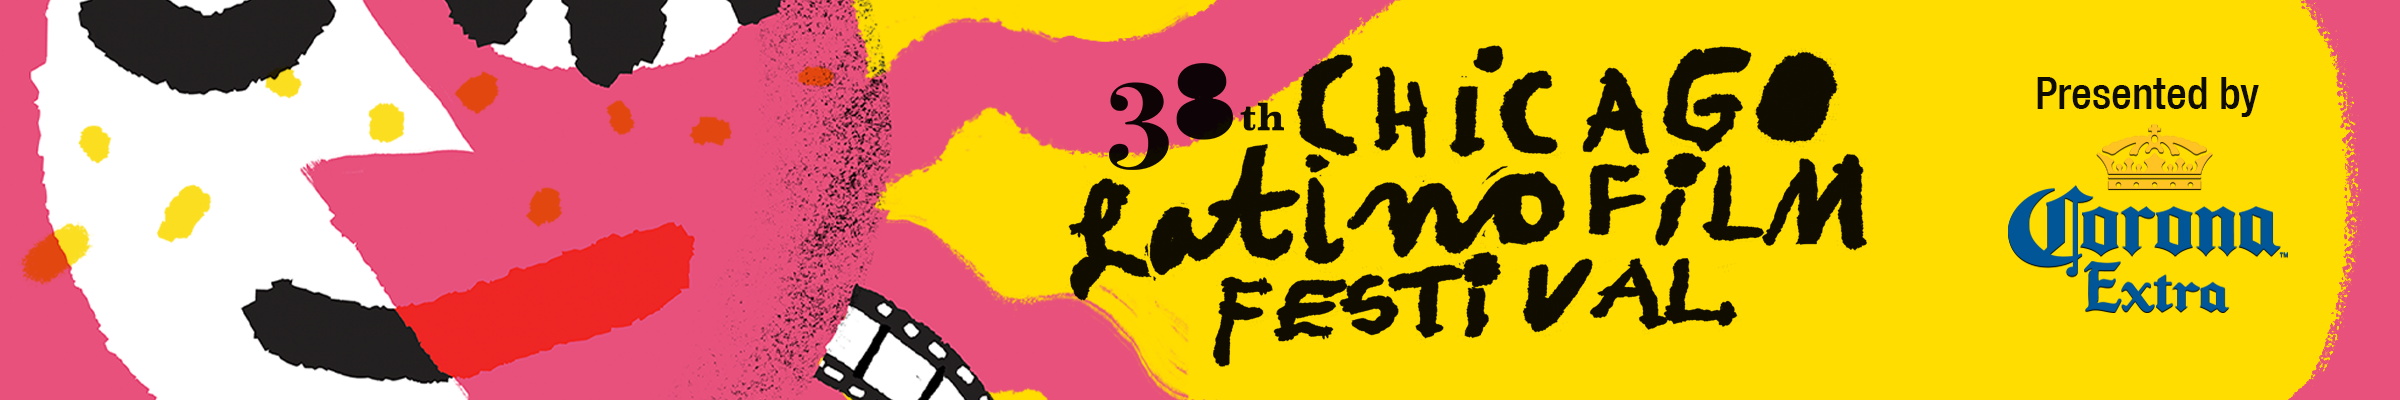 38th Chicago Latino Film Festival